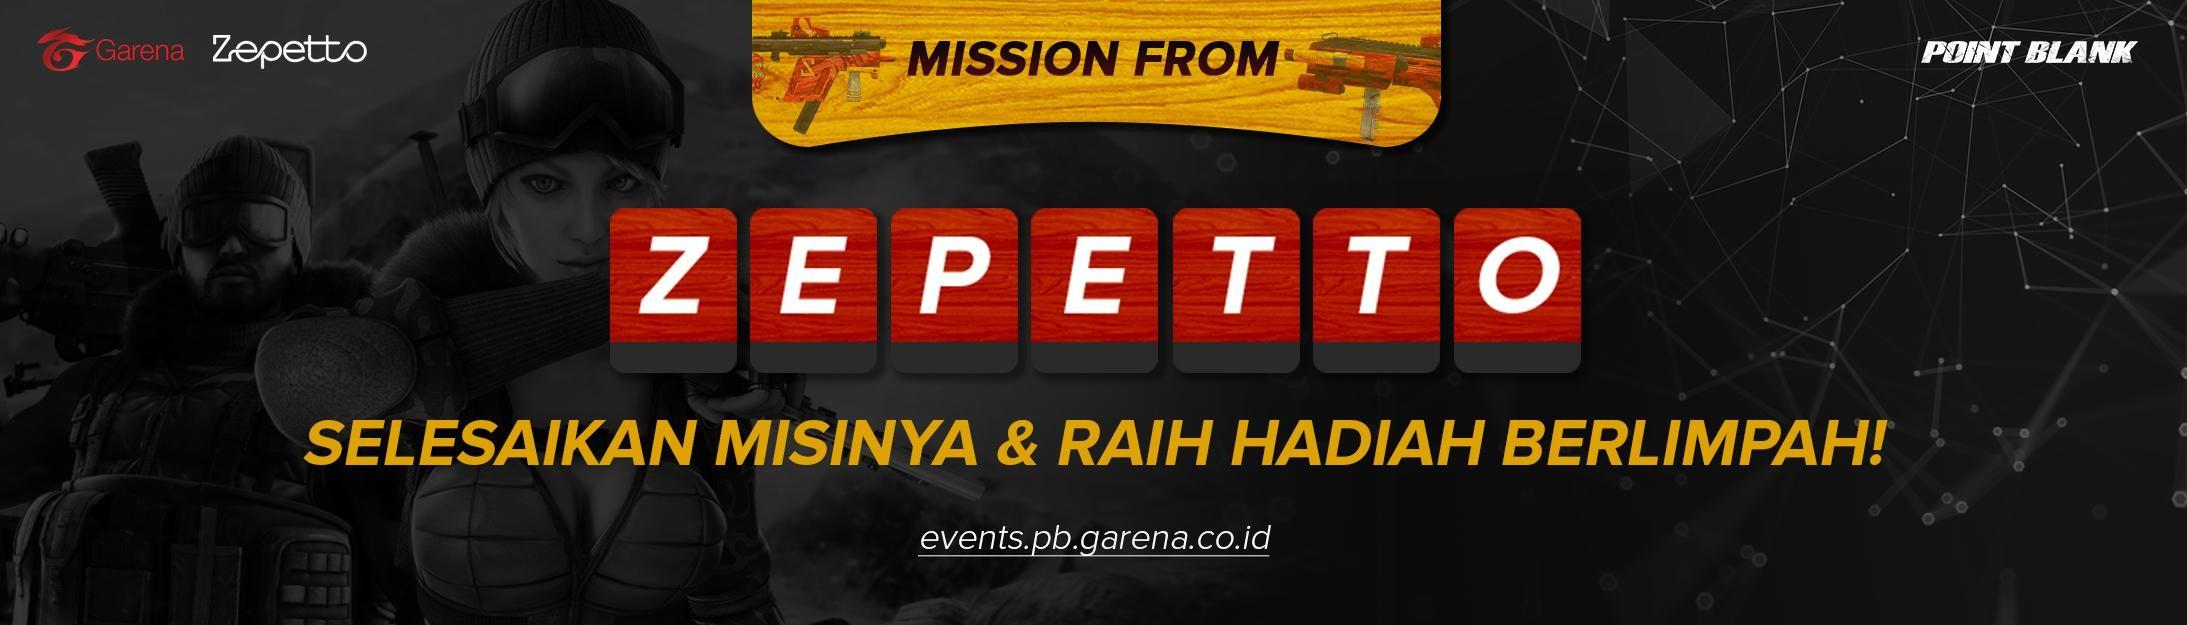 Event Terbaru Garena Point Blank: "Mission from Zepetto" Sudah Dimulai Hari Ini!!!